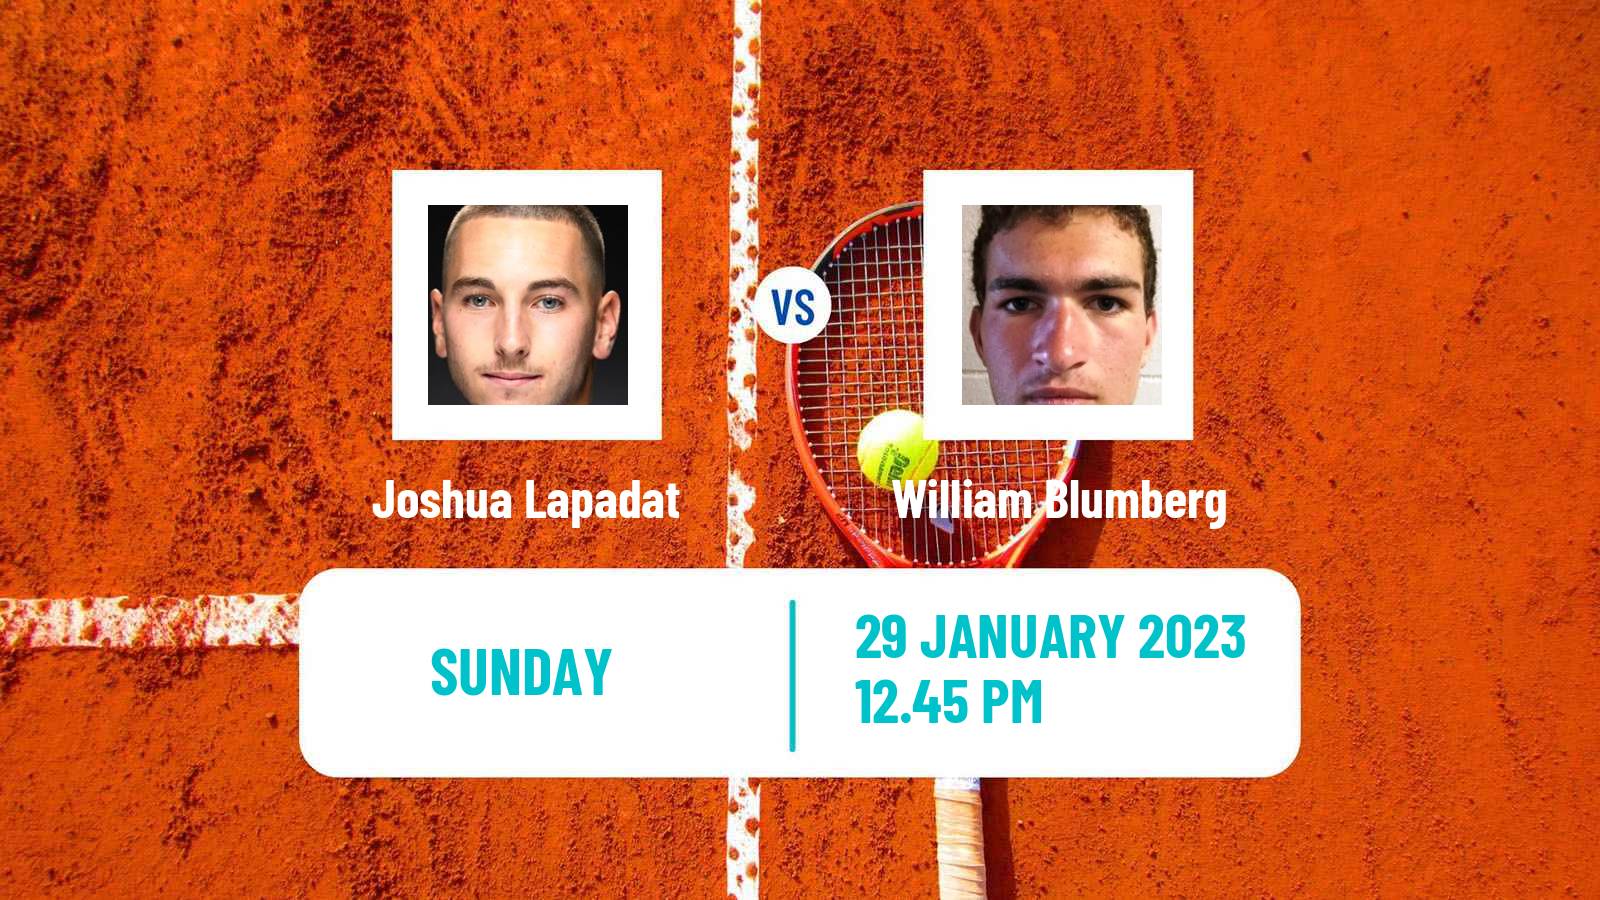 Tennis ATP Challenger Joshua Lapadat - William Blumberg